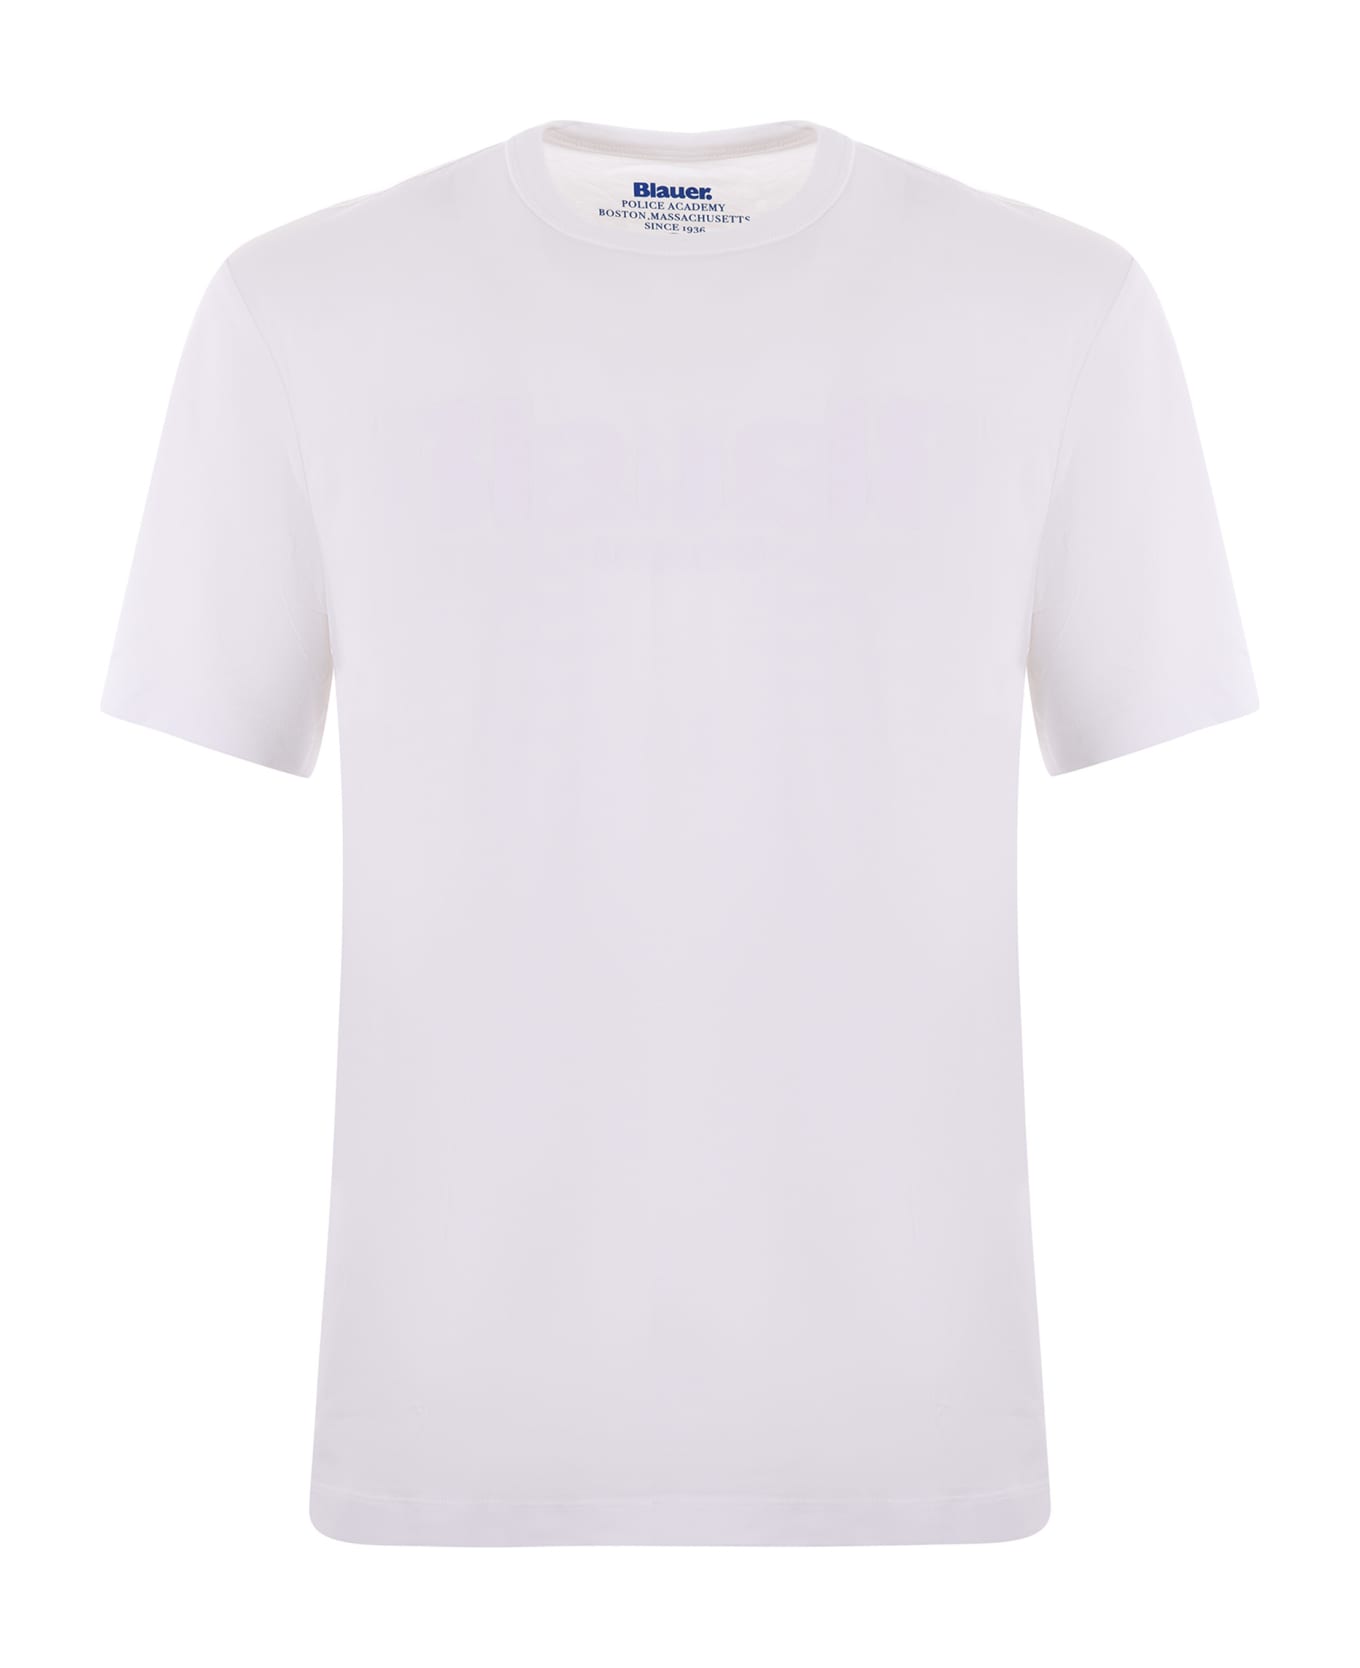 Blauer T-shirt - Bianco シャツ